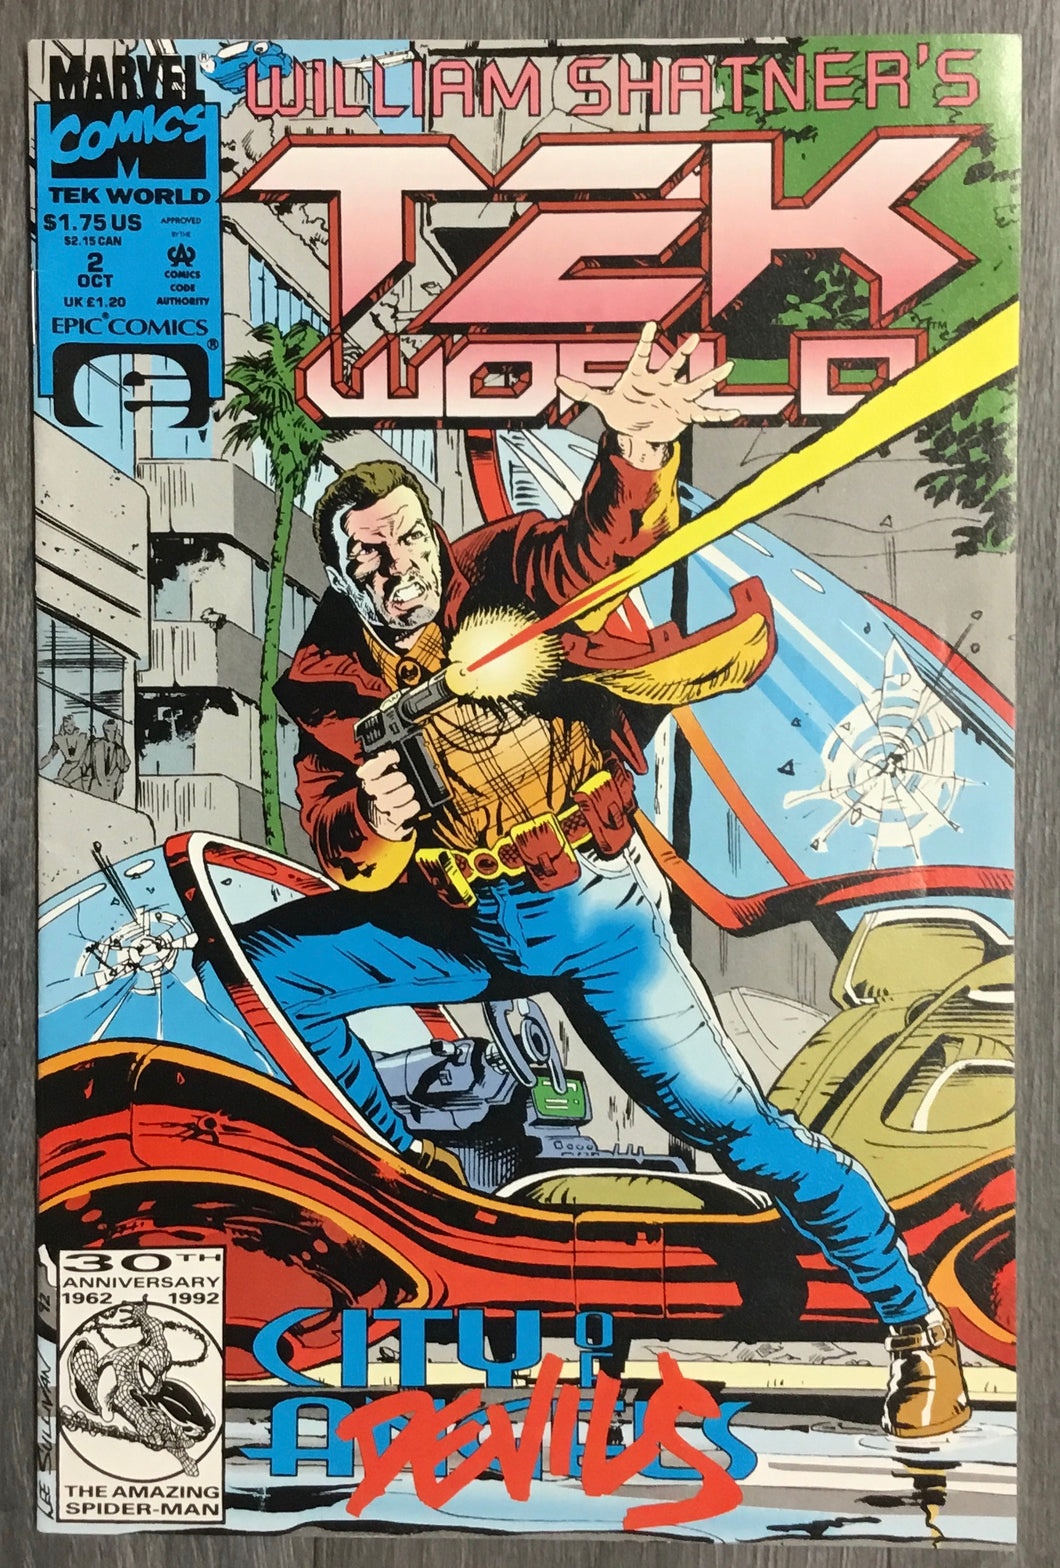 William Shatner’s Tek World No. #2 1992 Marvel/Epic Comics